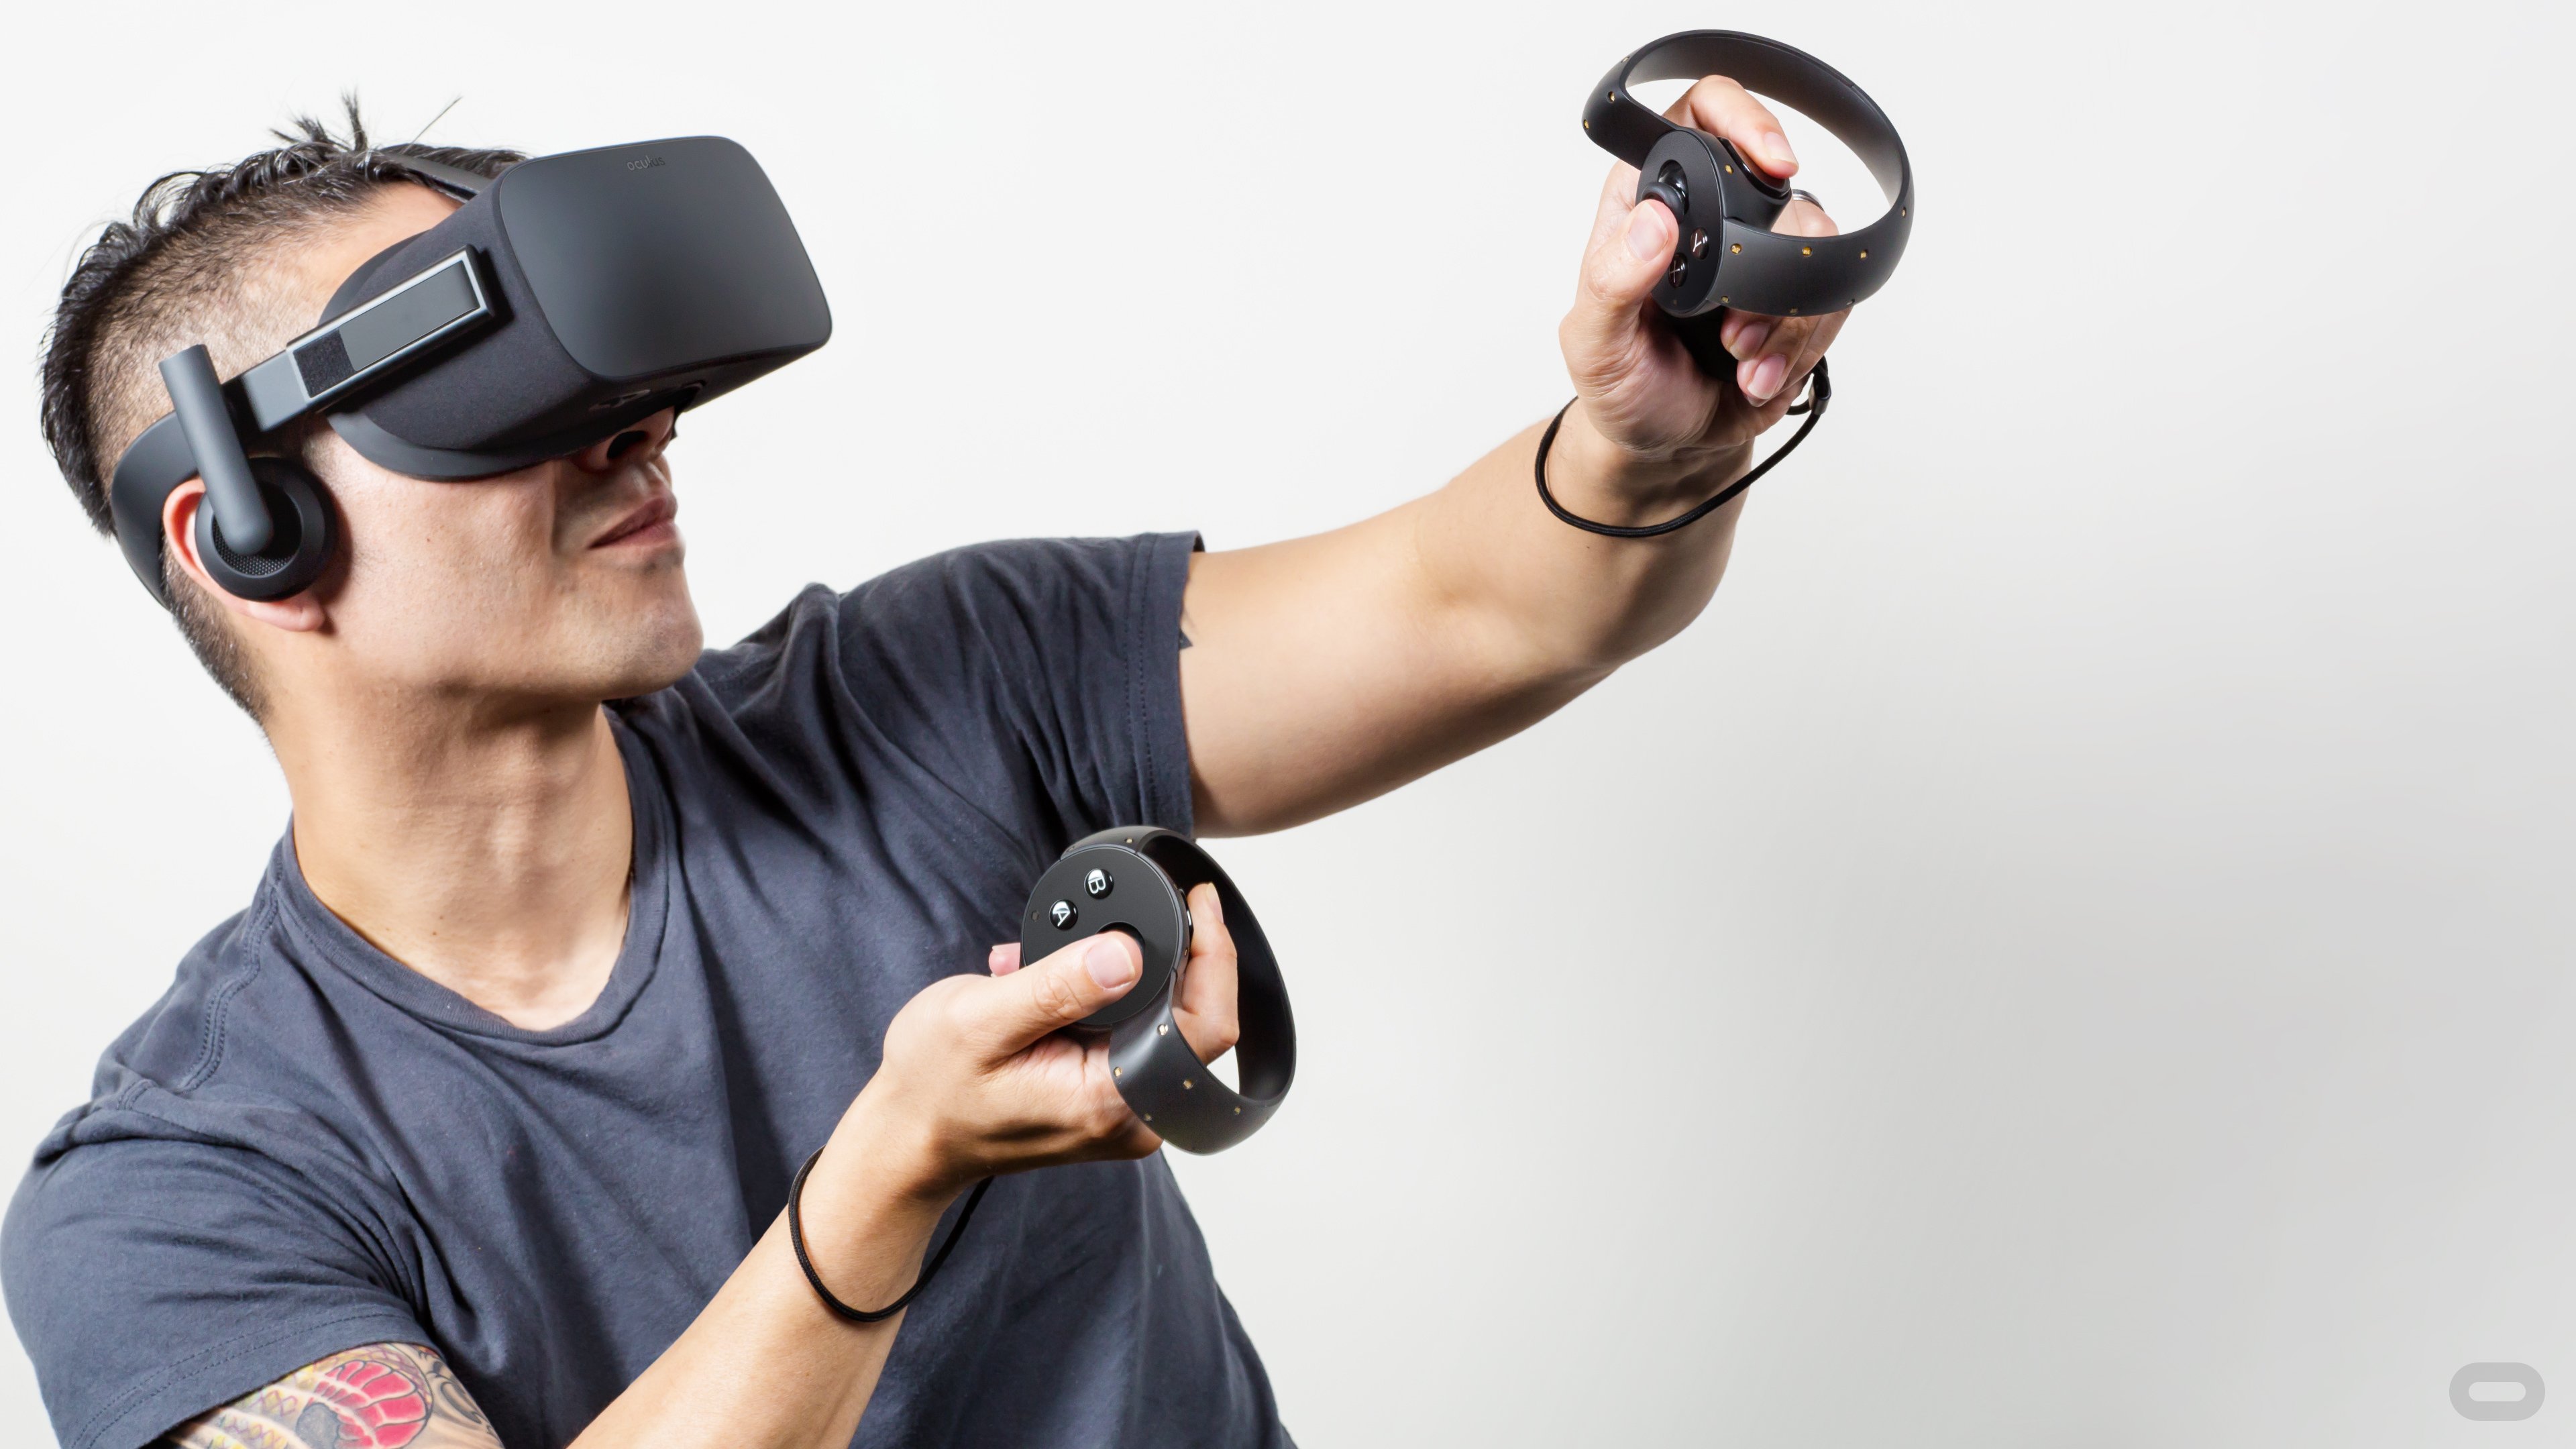 Facebook's Oculus Announces Rift VR Headset, Launching in Q1 '16